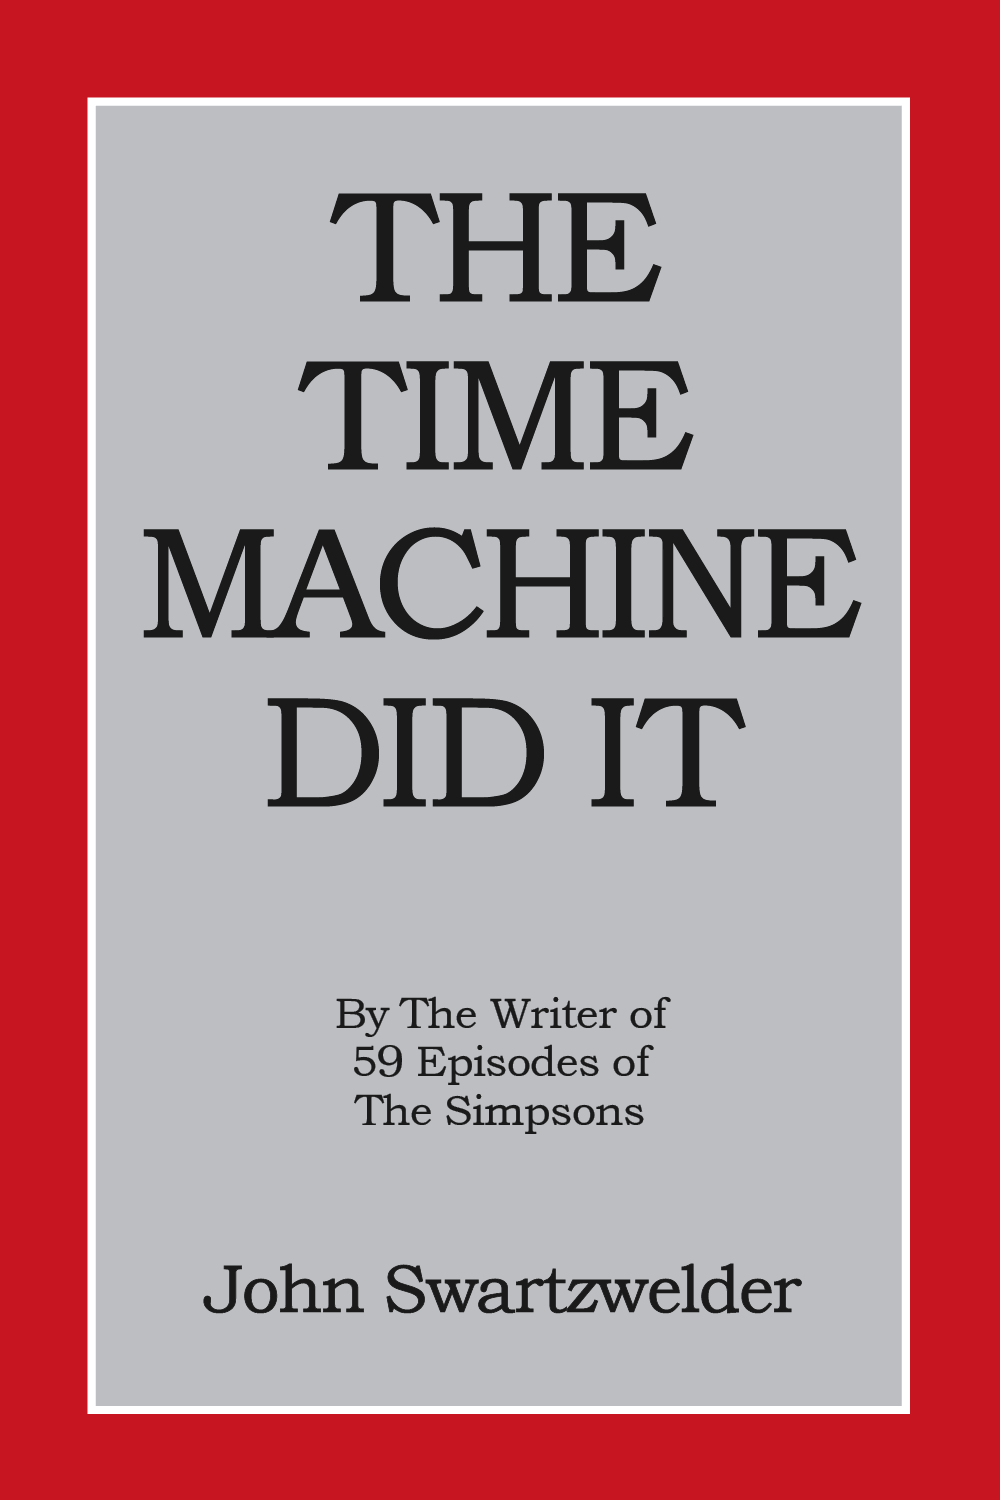 The Time Machine Did It by John Swartzwelder